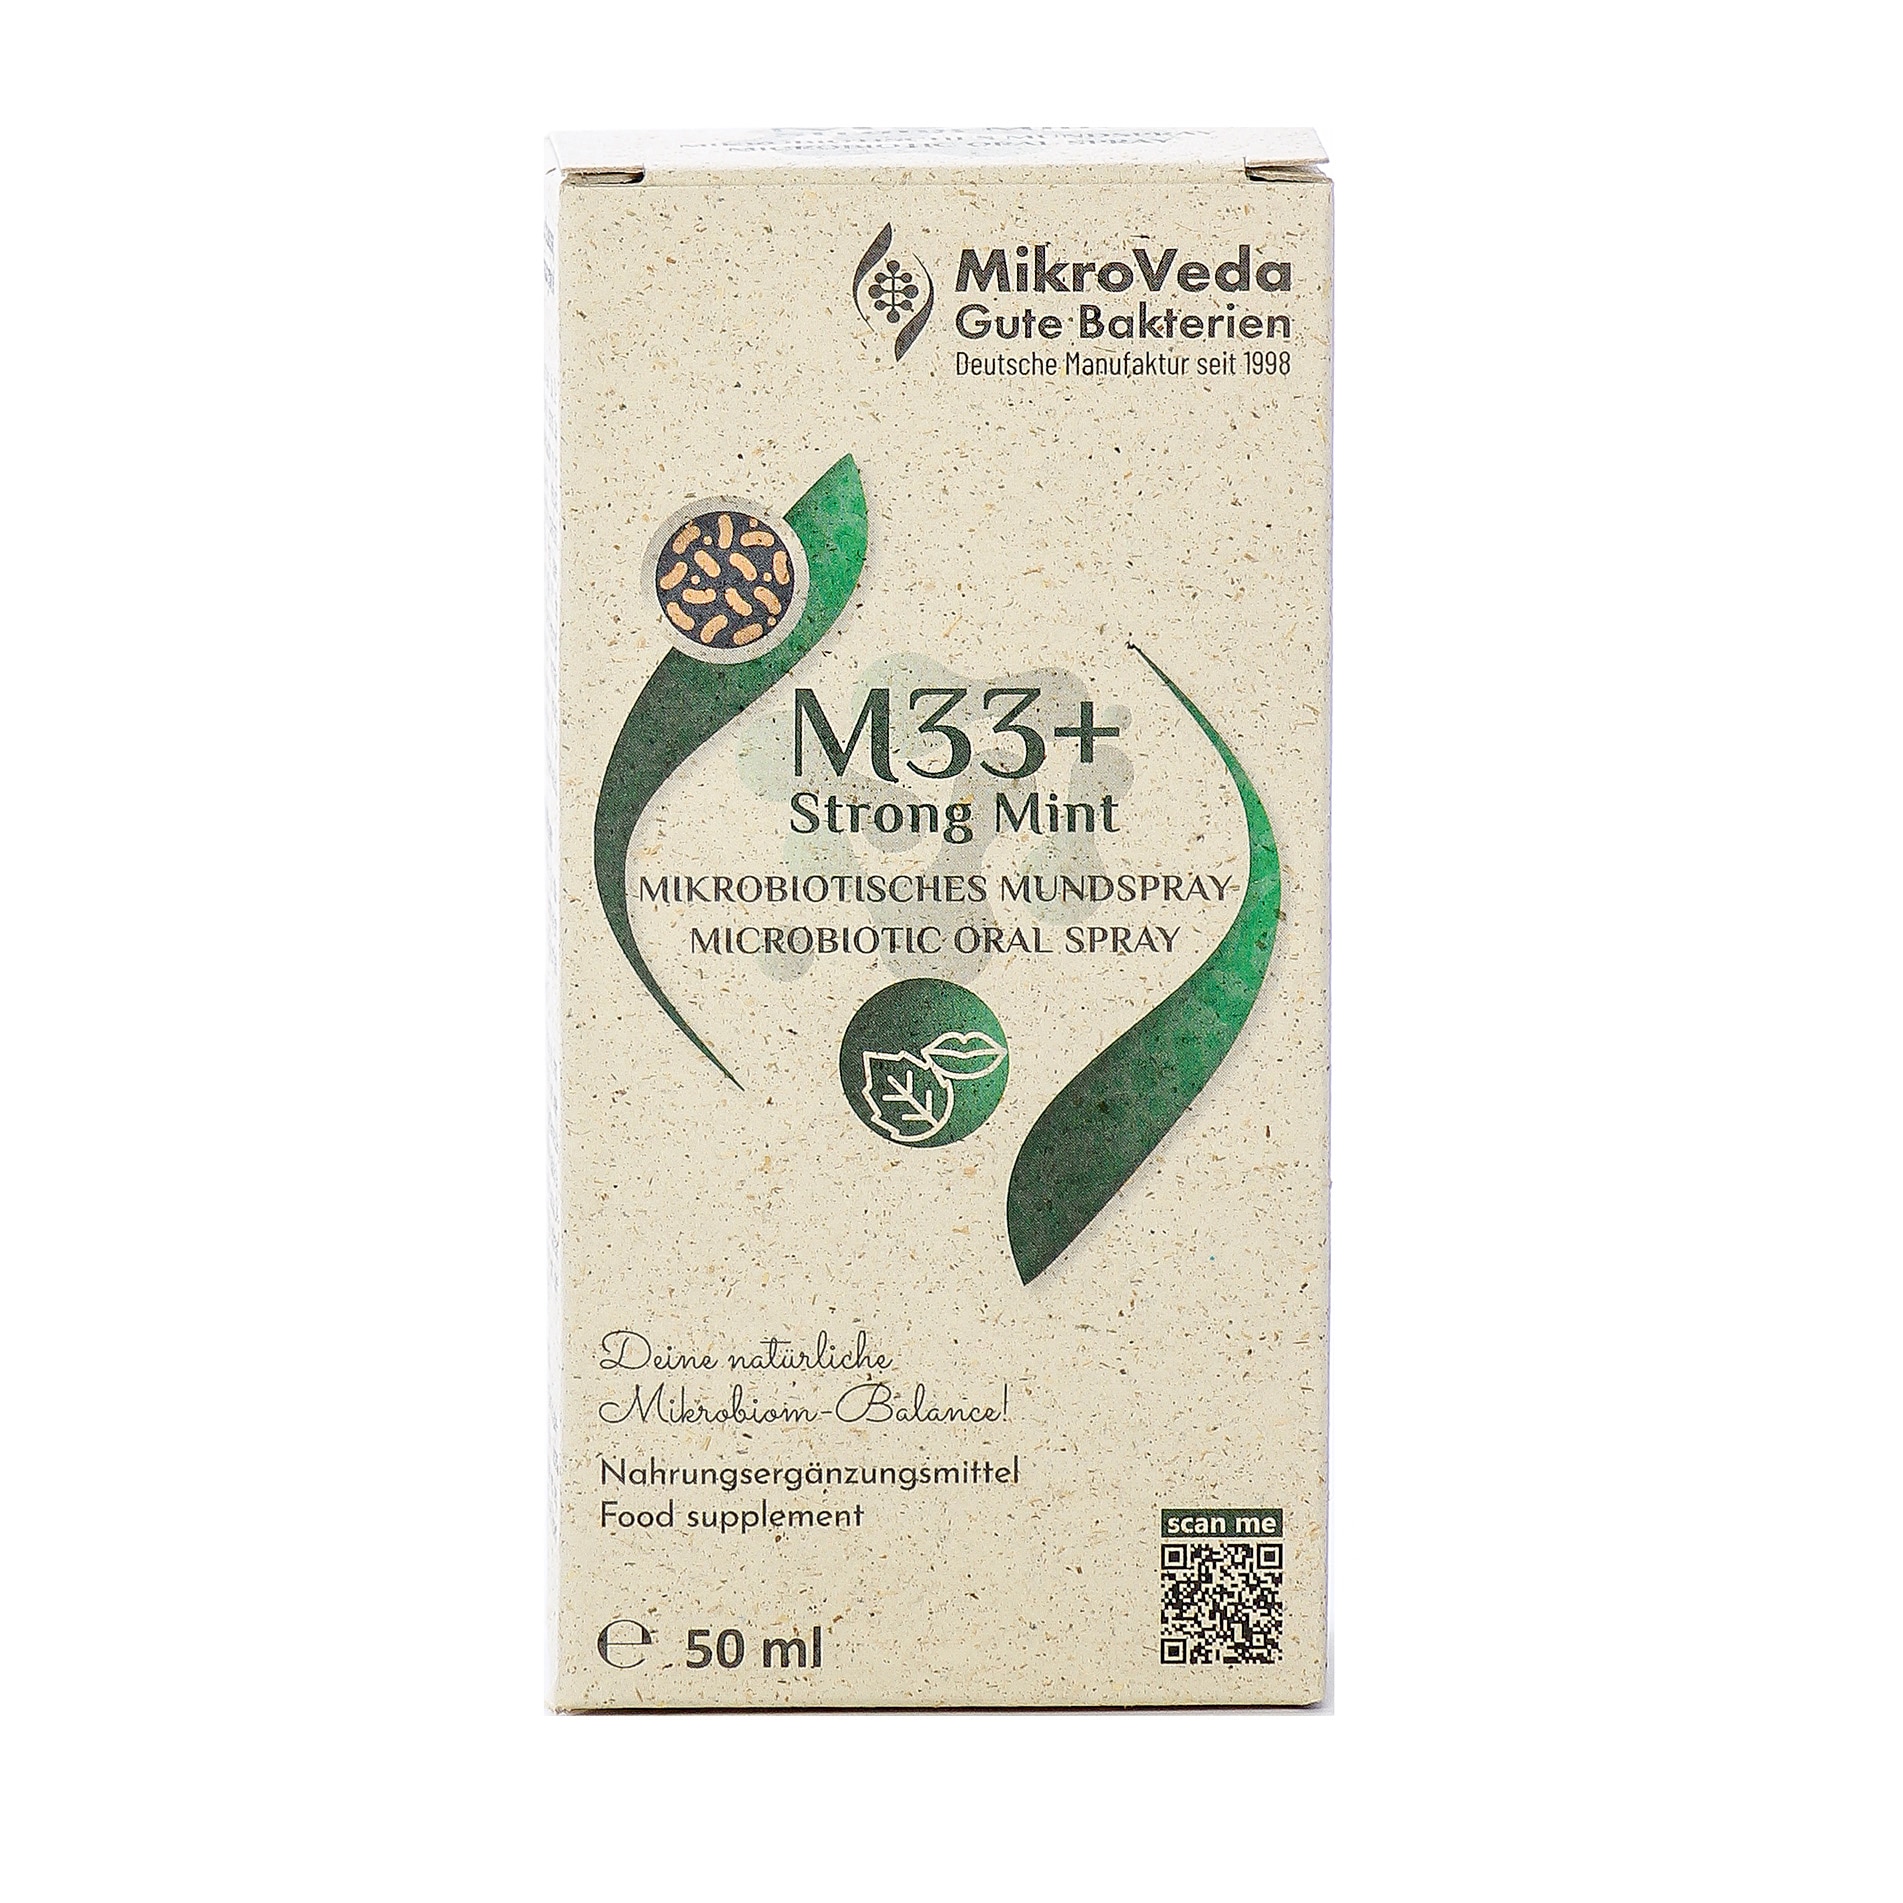 MikroVeda M33+ Strong Mint Mikrobiomisuusuihke